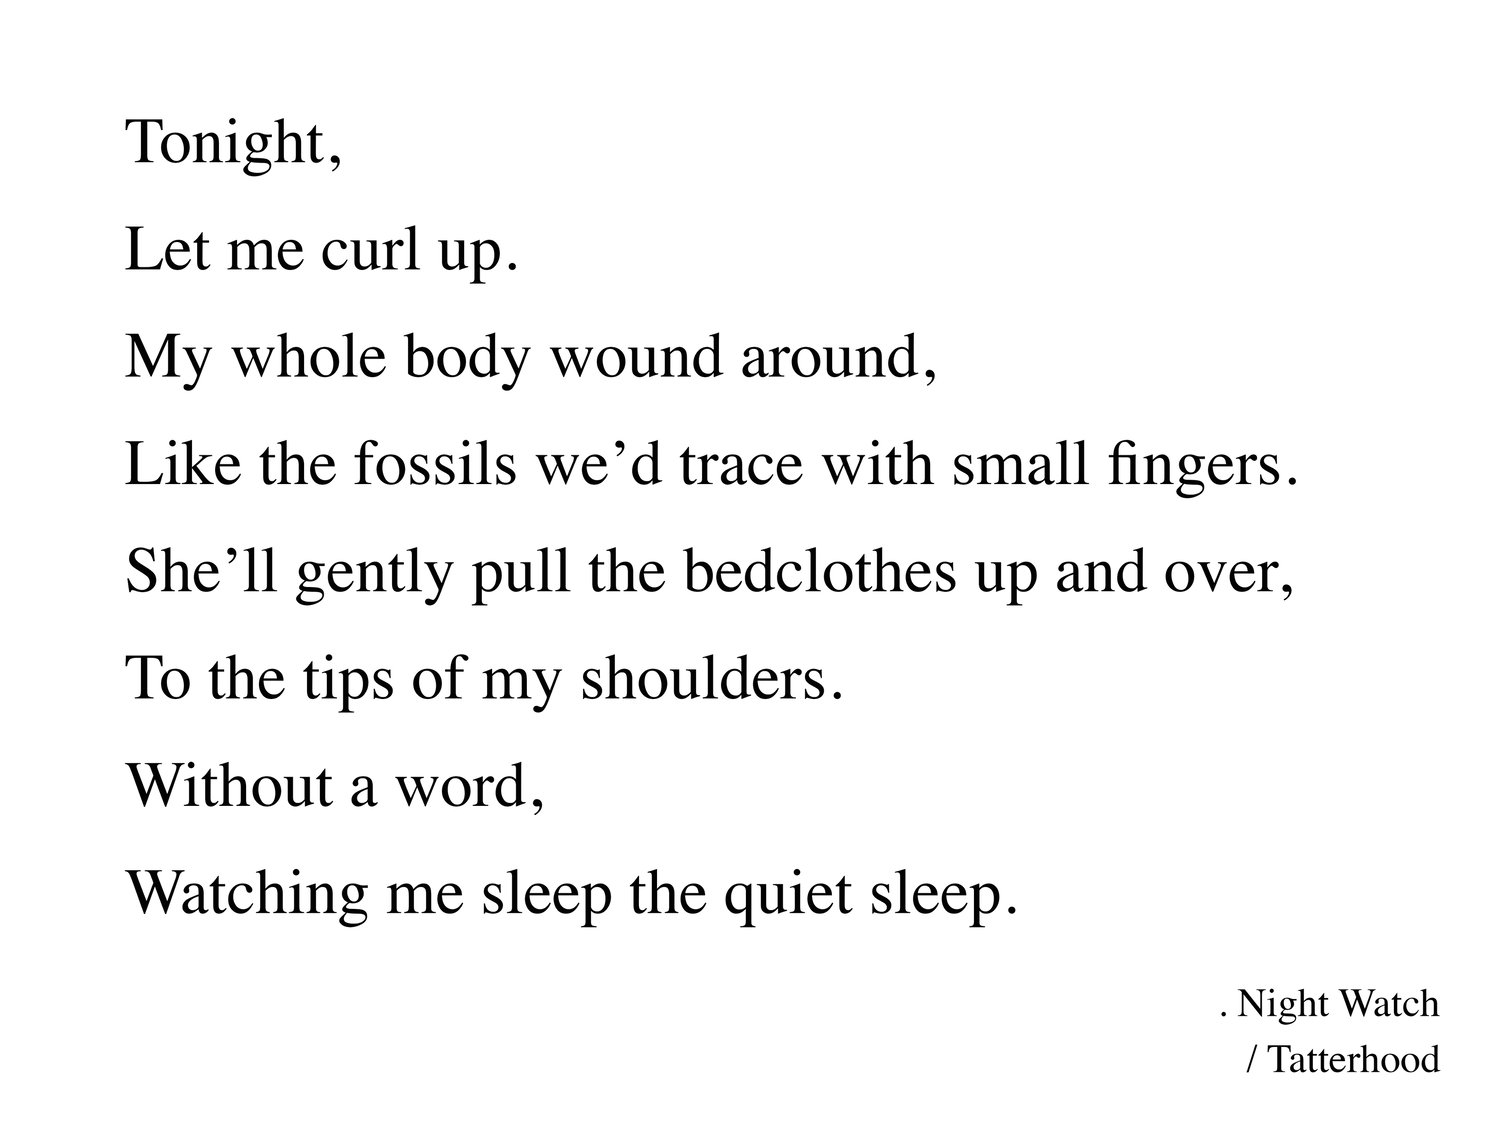 Image of Night Watch - a poem postcard by Tatterhood